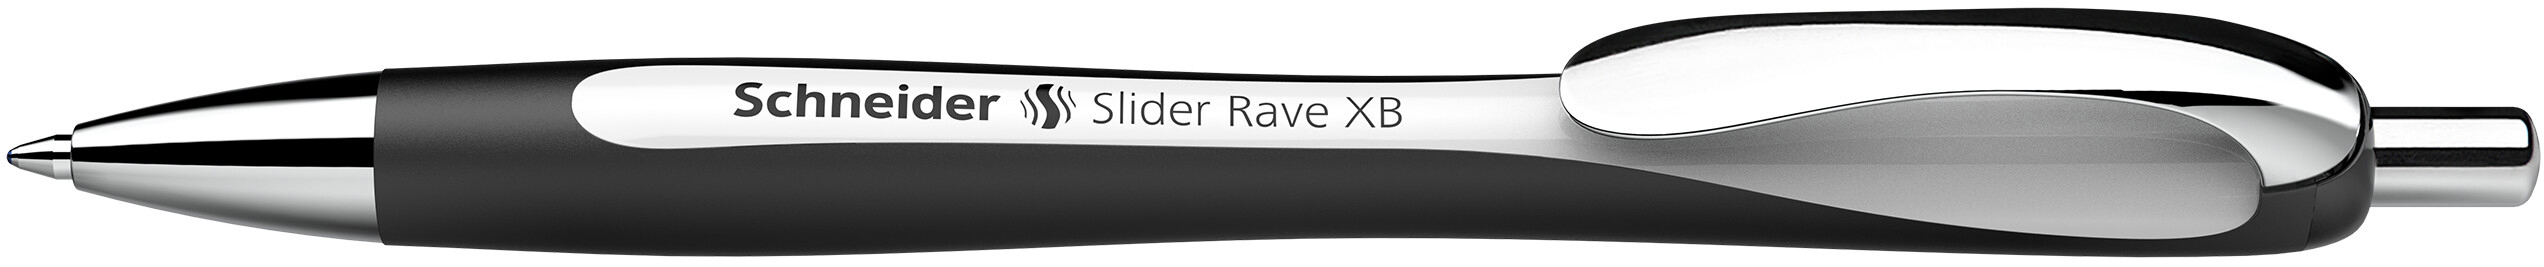 SCHNEIDER Stylo à bille Slider Rave XB 132549 noir-blanc, refill 0.7mm